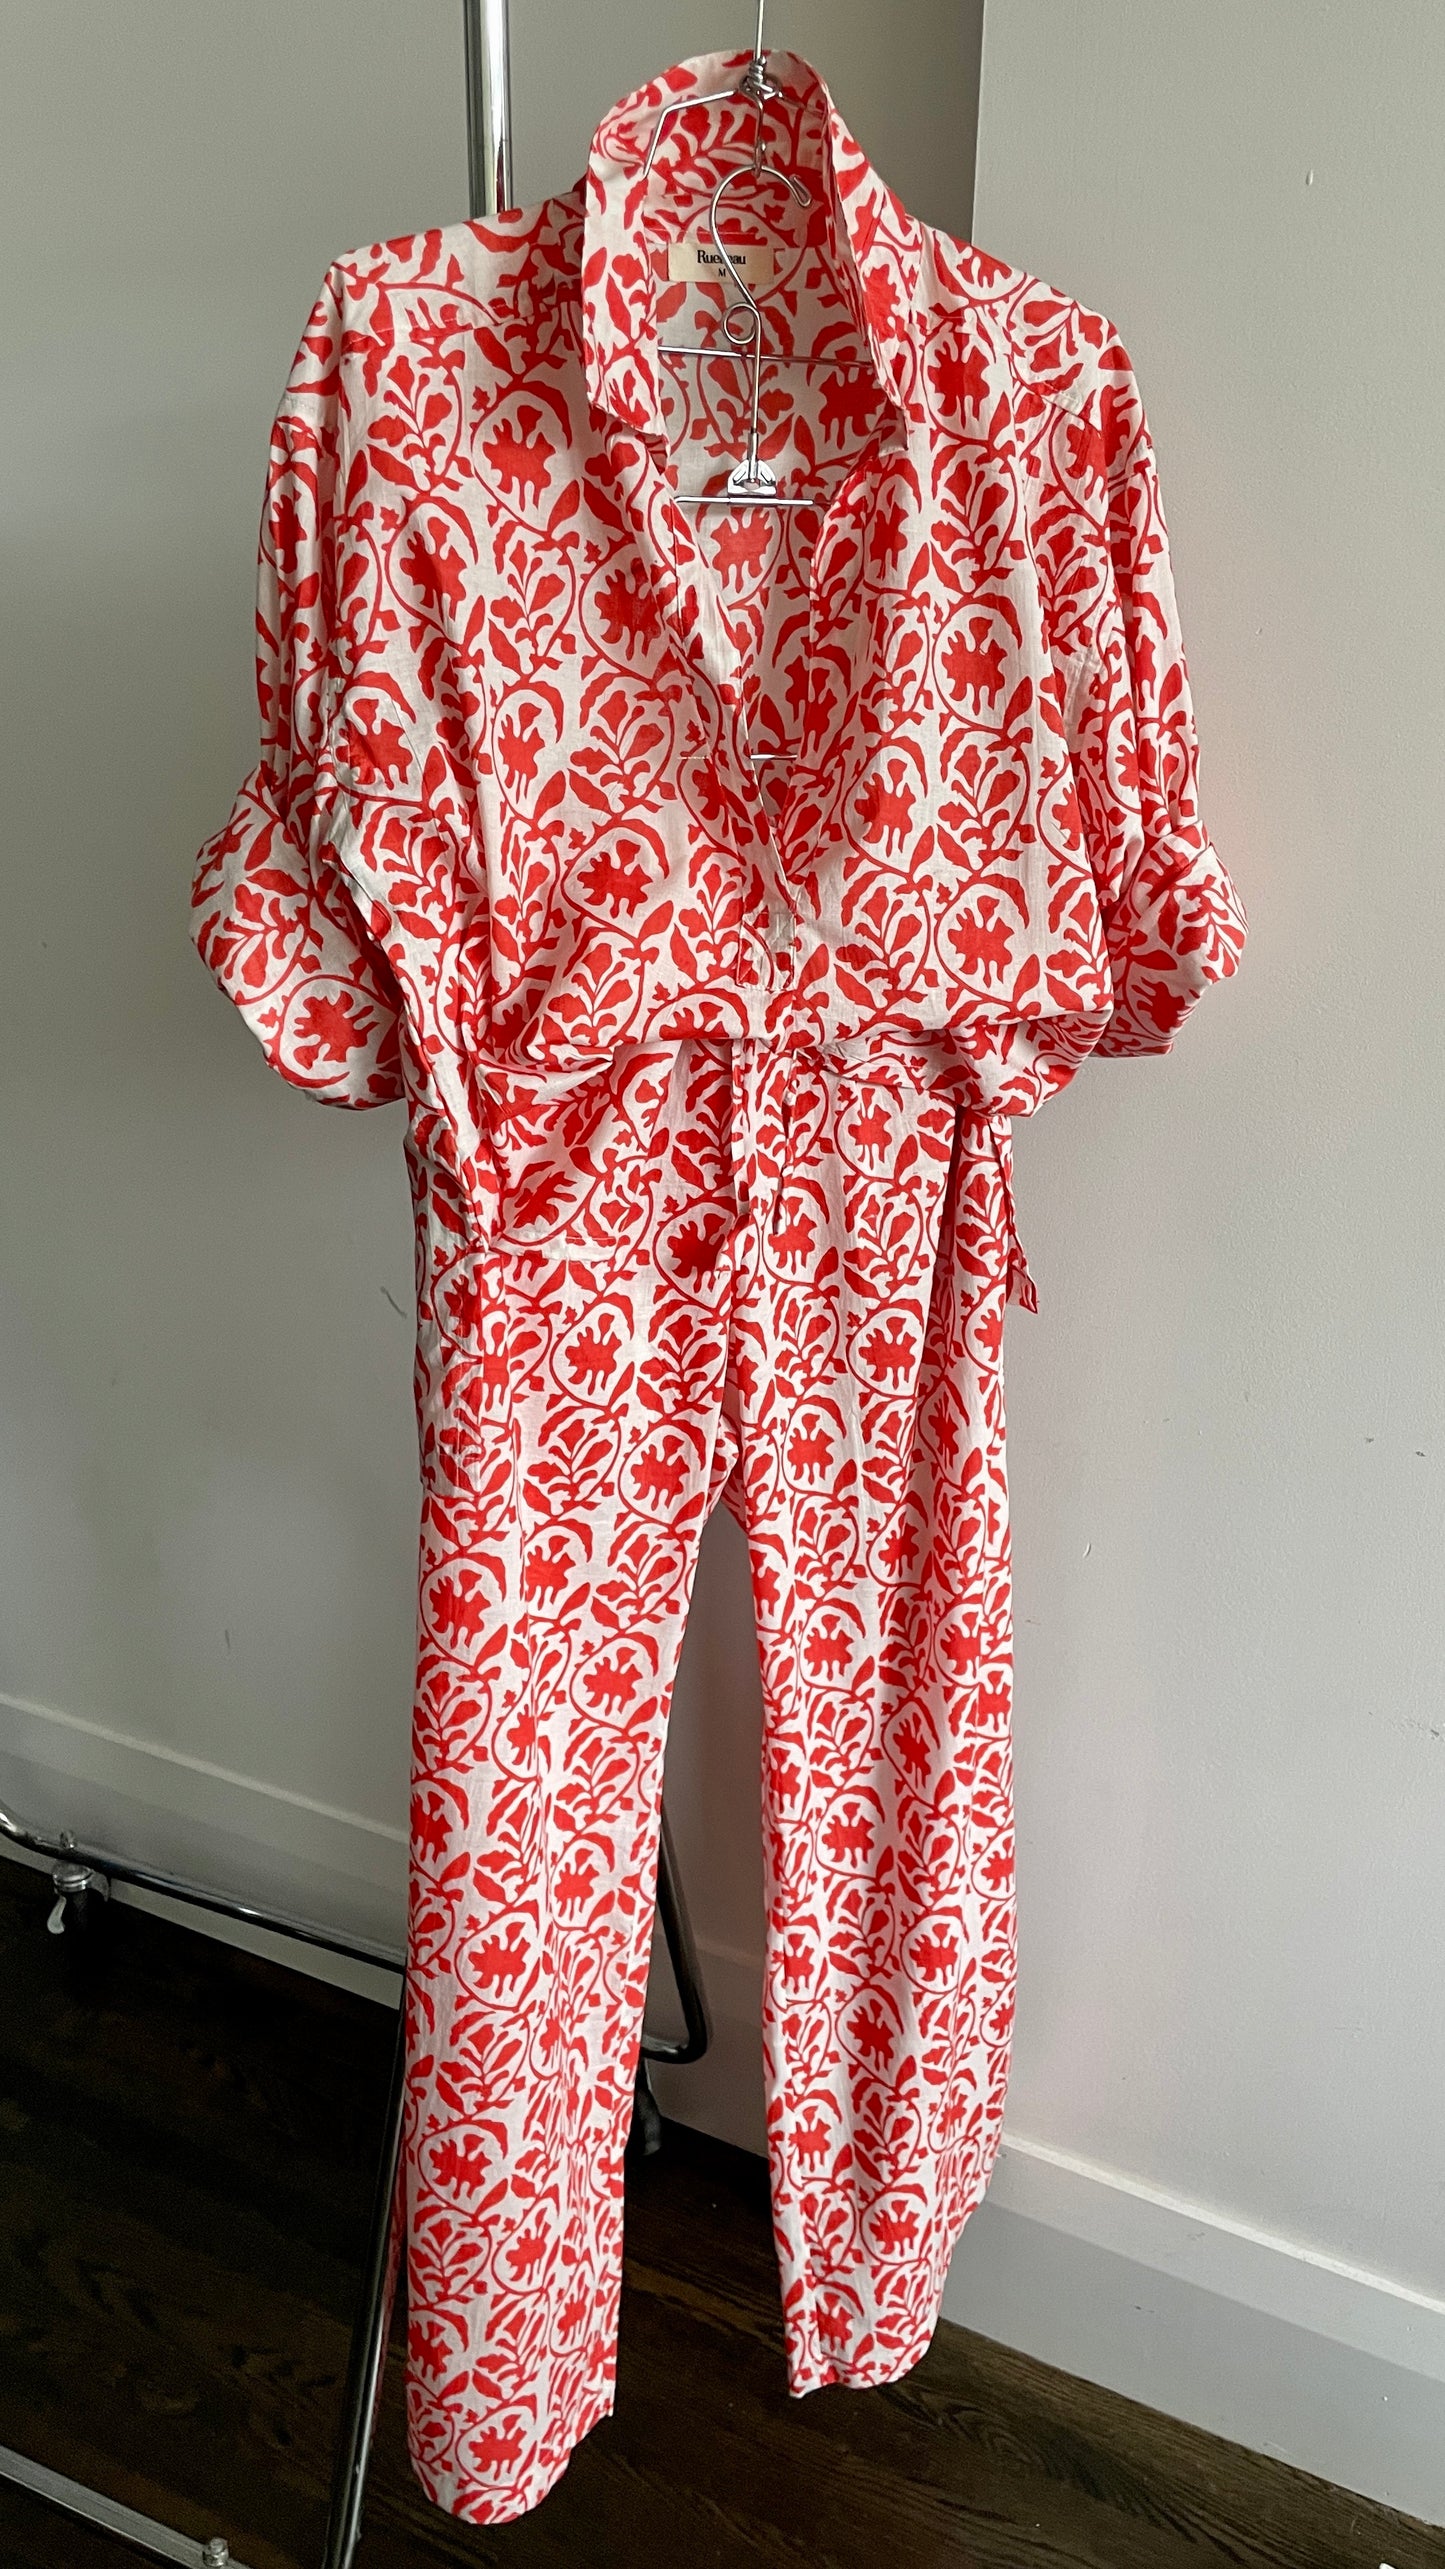 The Chic Pyjama